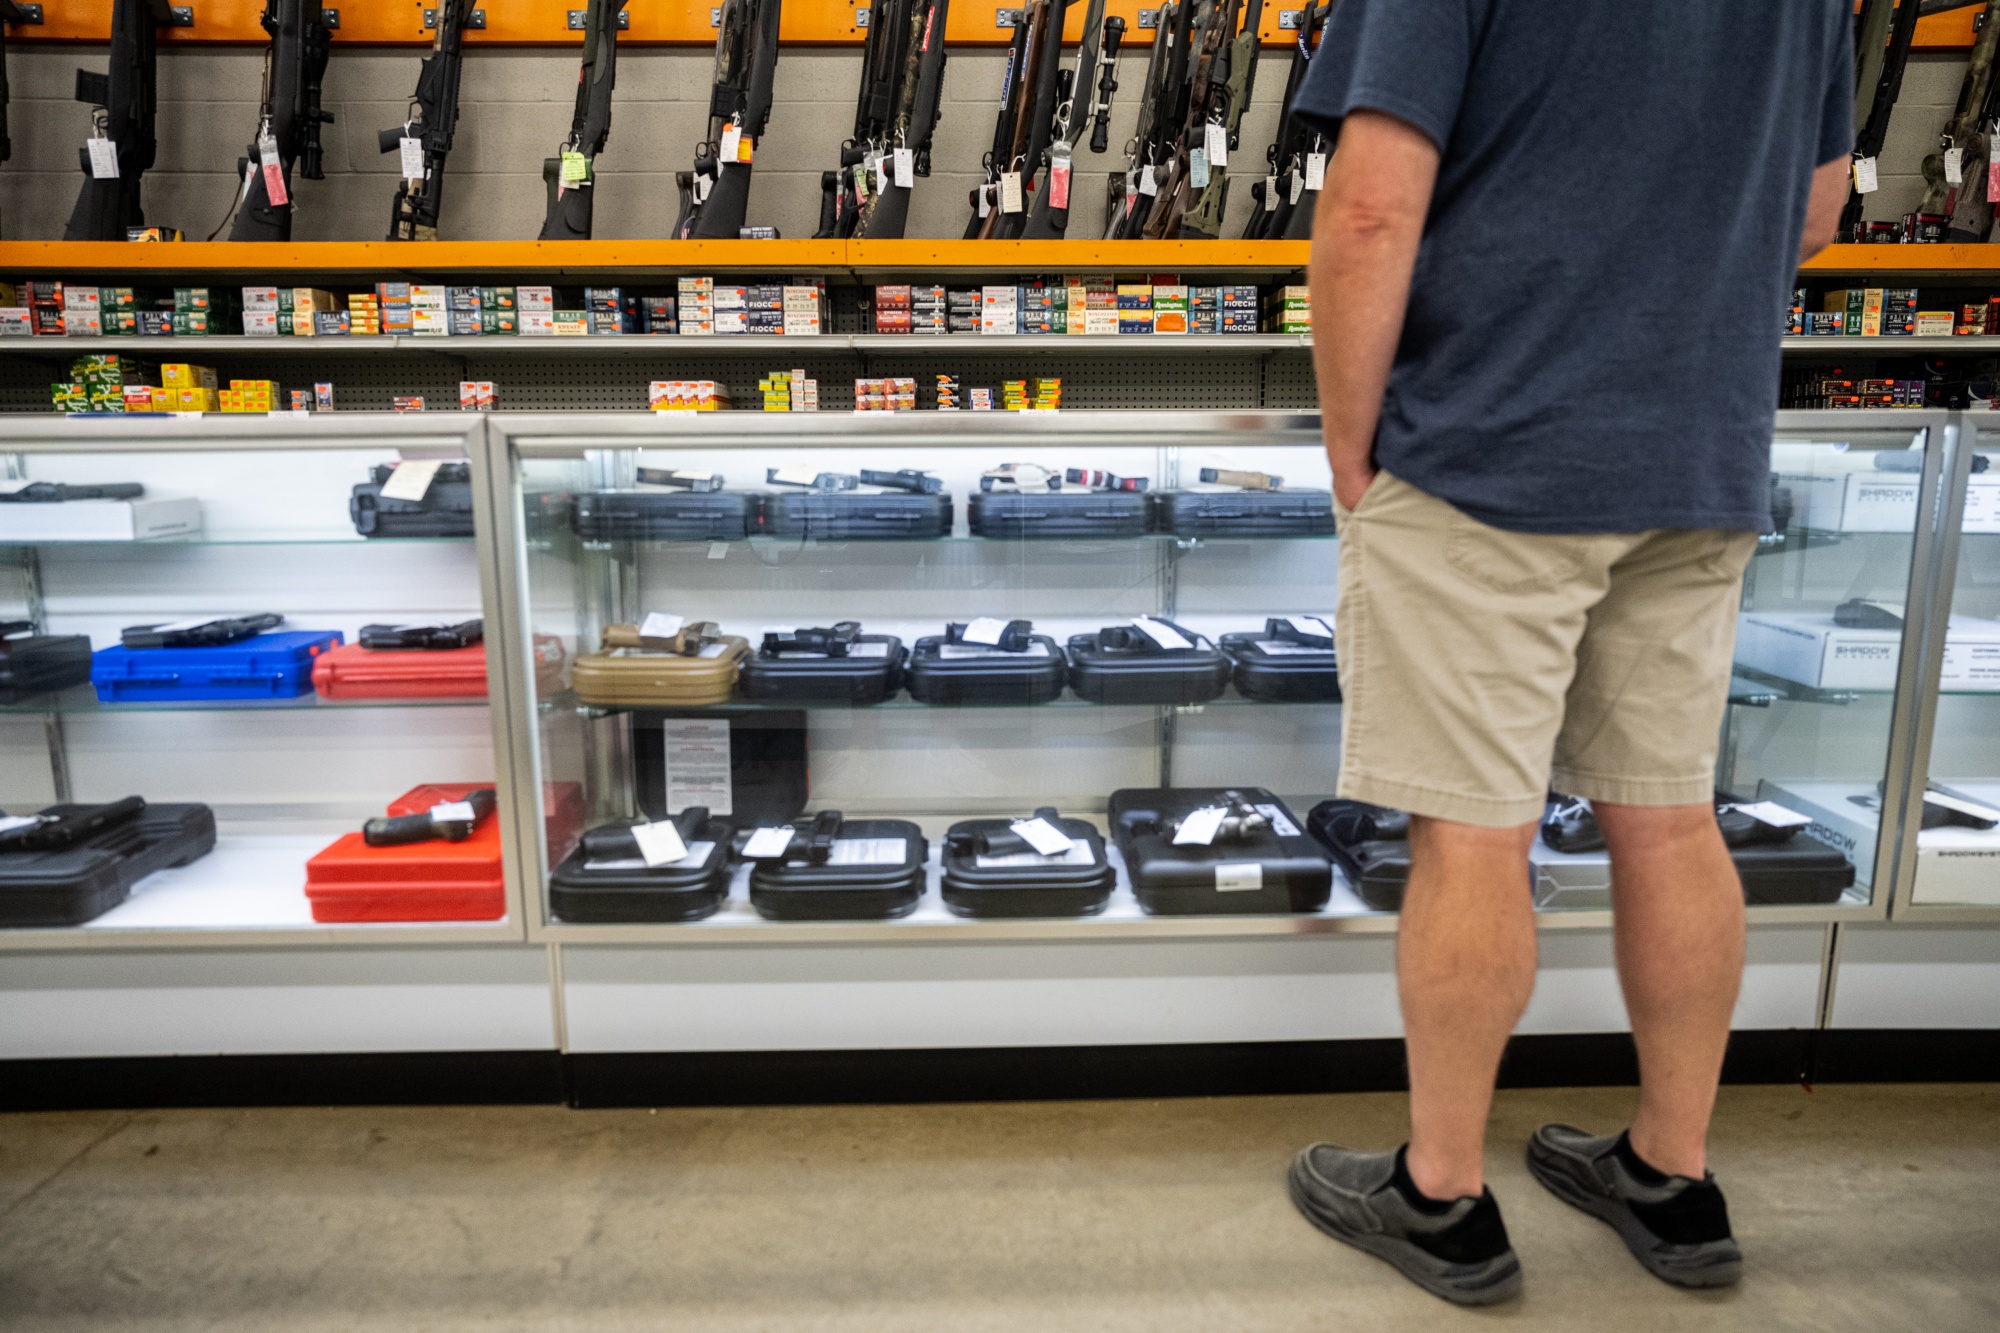 A customer views handguns for sale at a store&nbsp;in West Point, Kentucky.